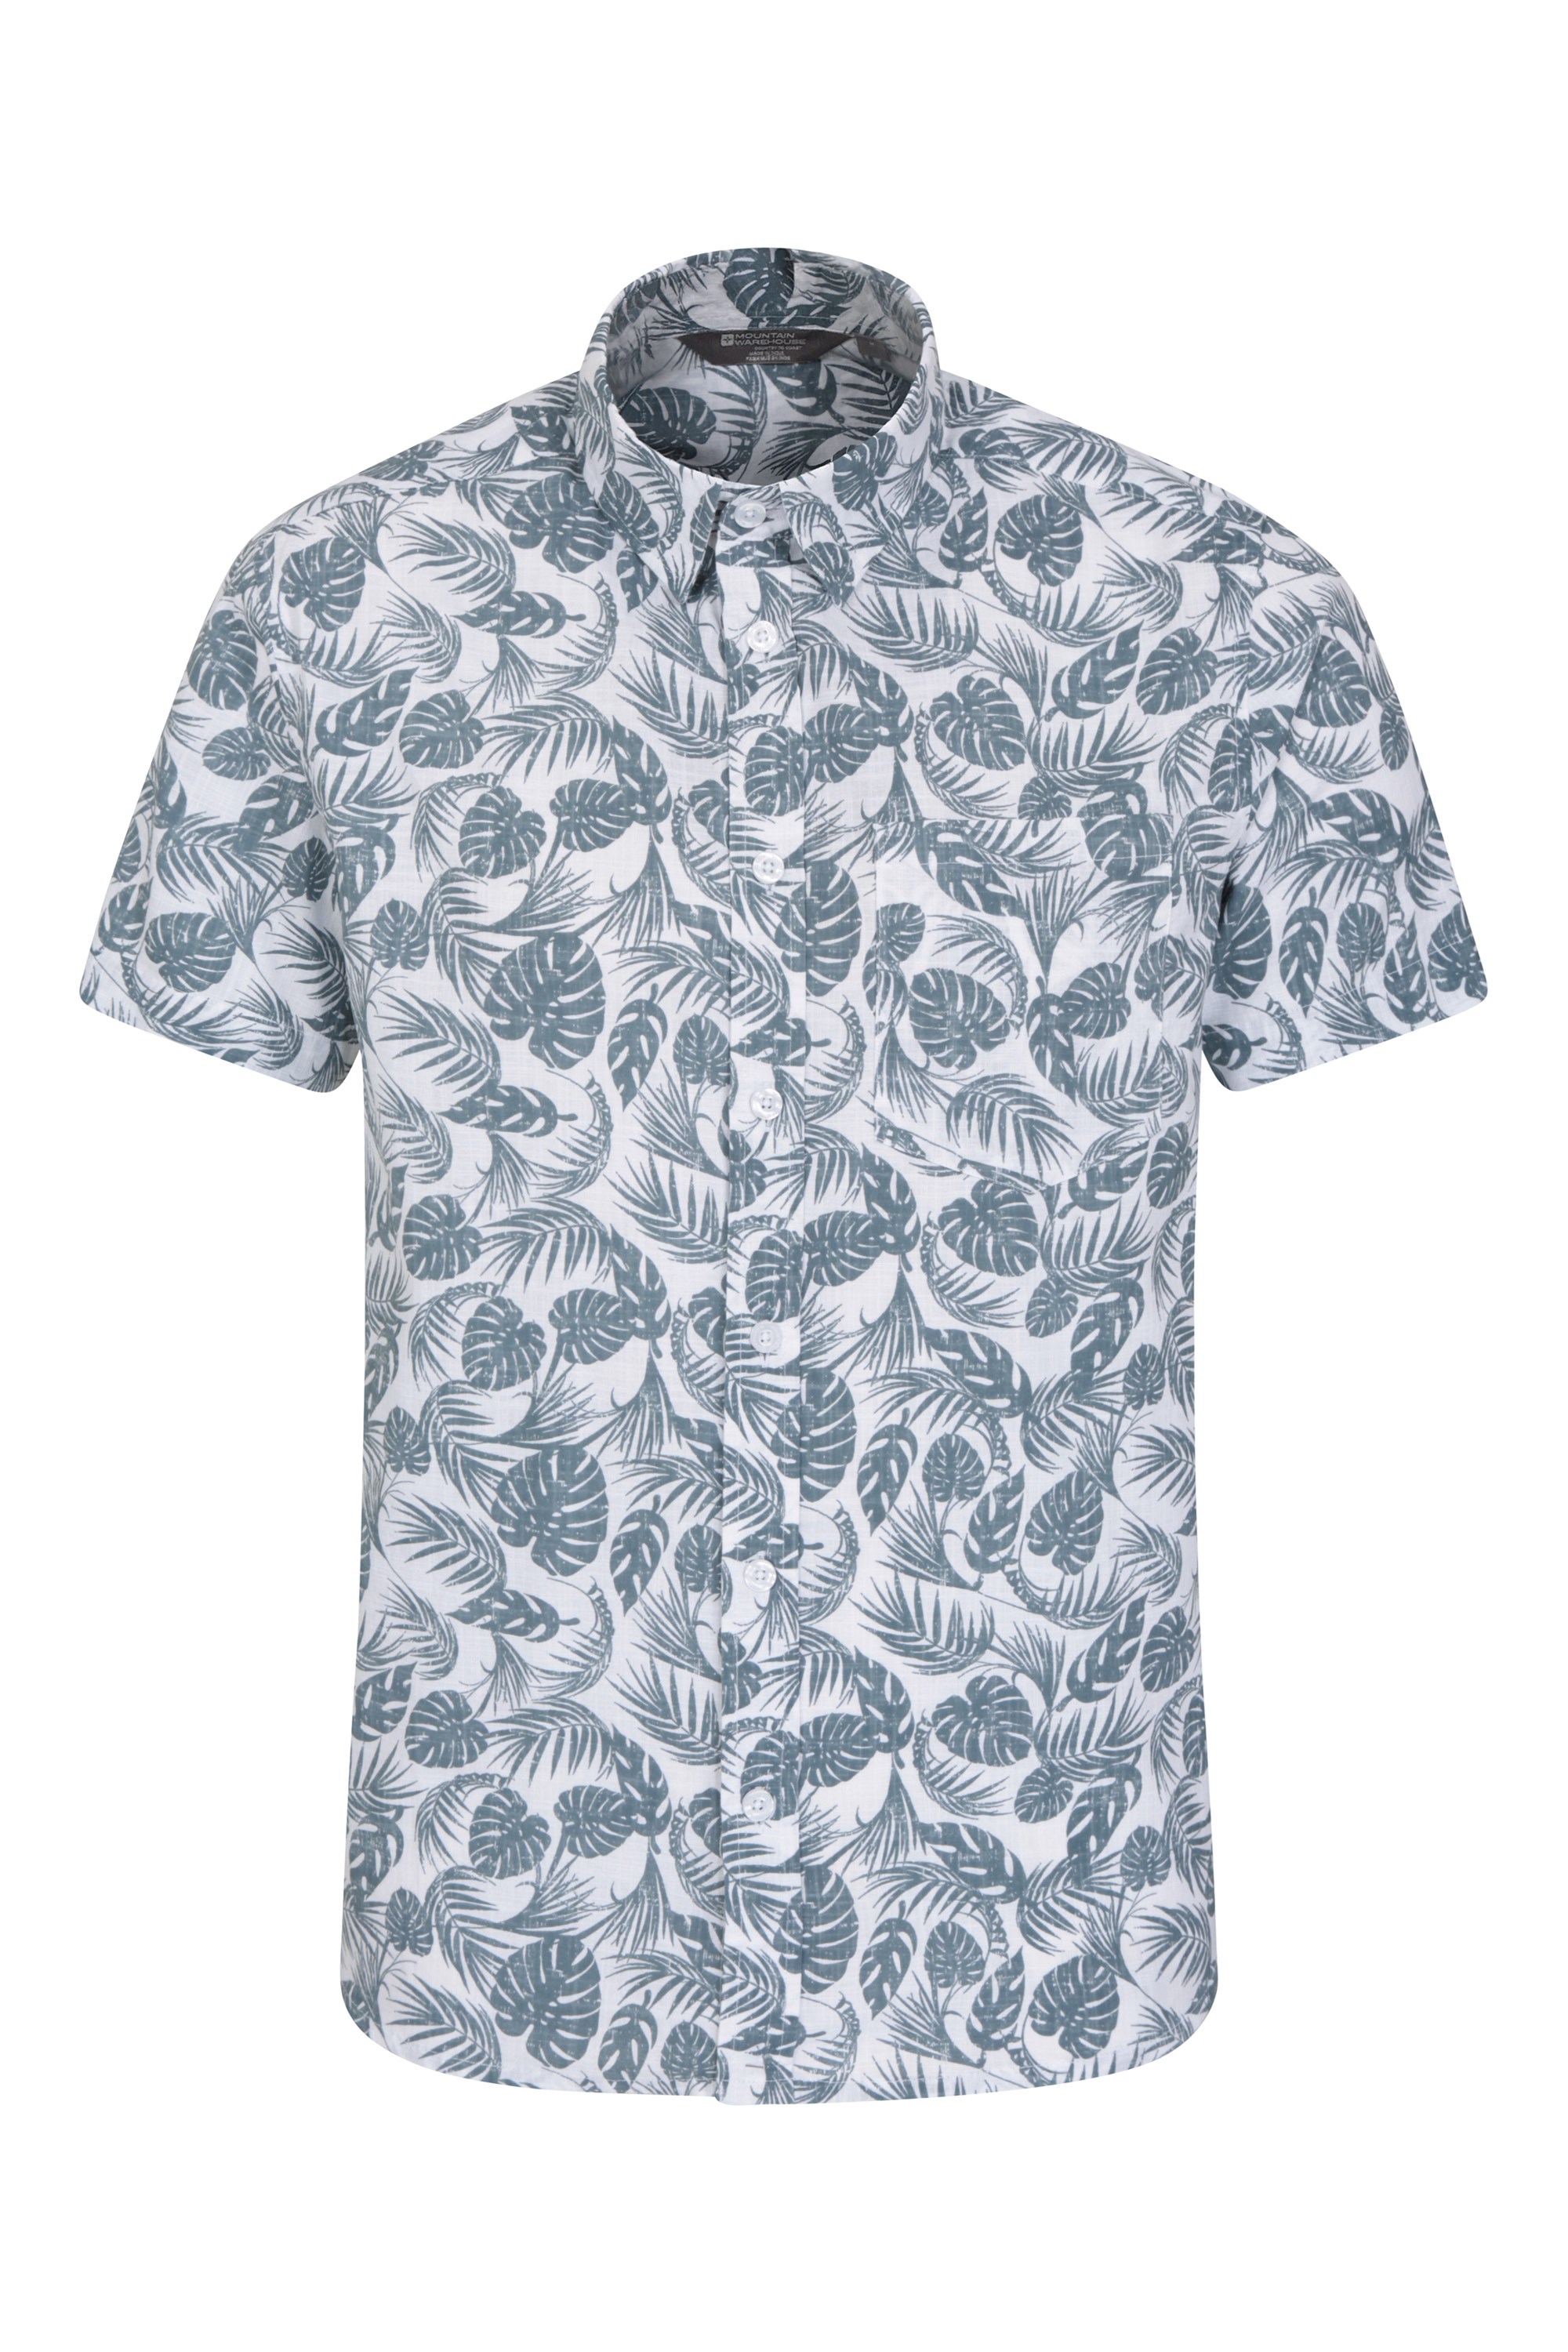 Tropical Printed Mens Short Sleeved Shirt - Teal